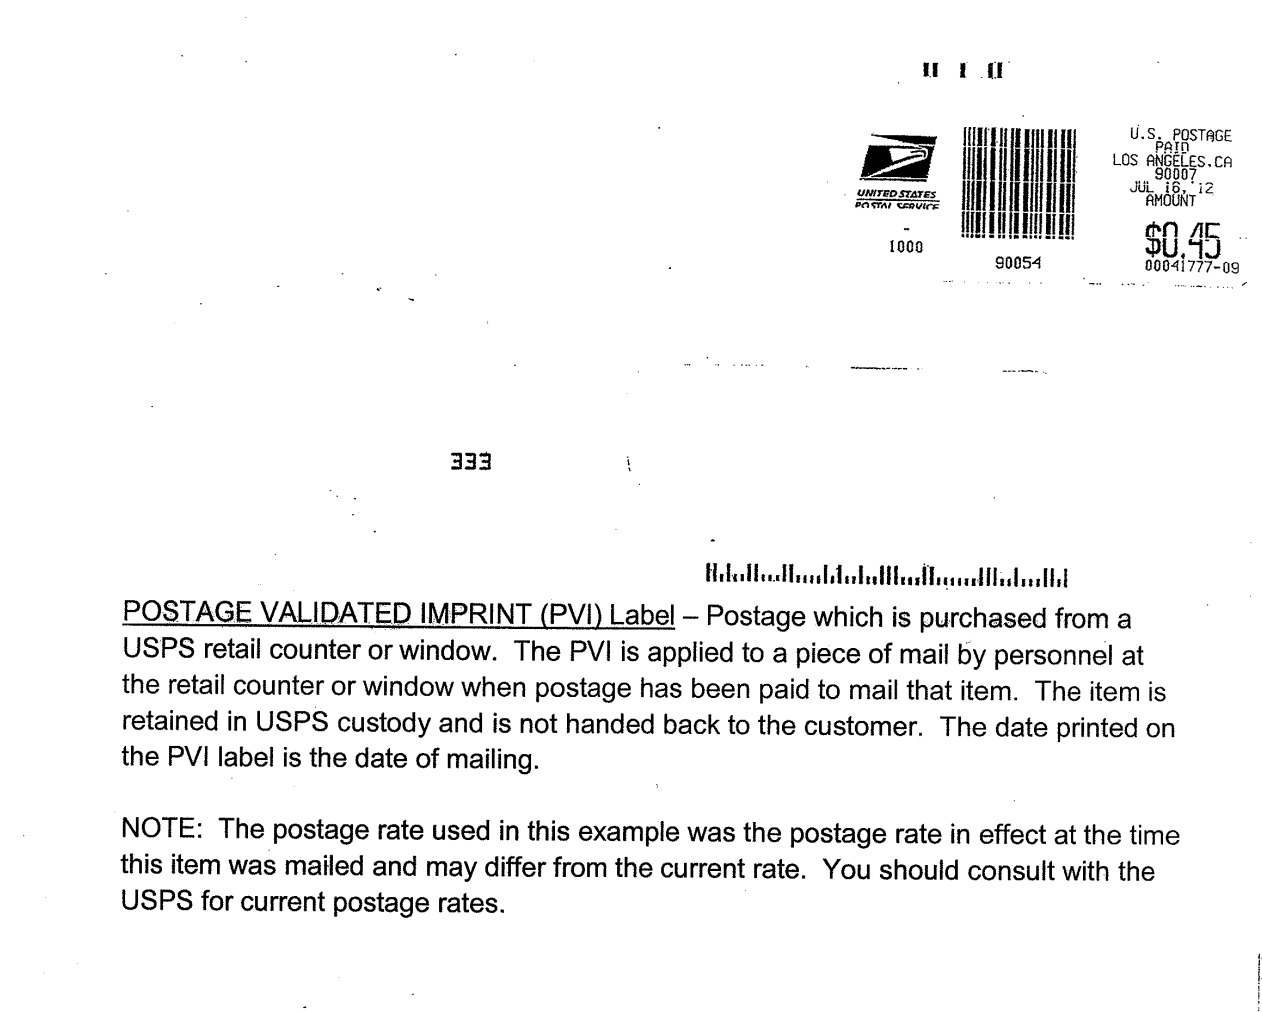 Postage Validated Imprint (PVI) Label example.